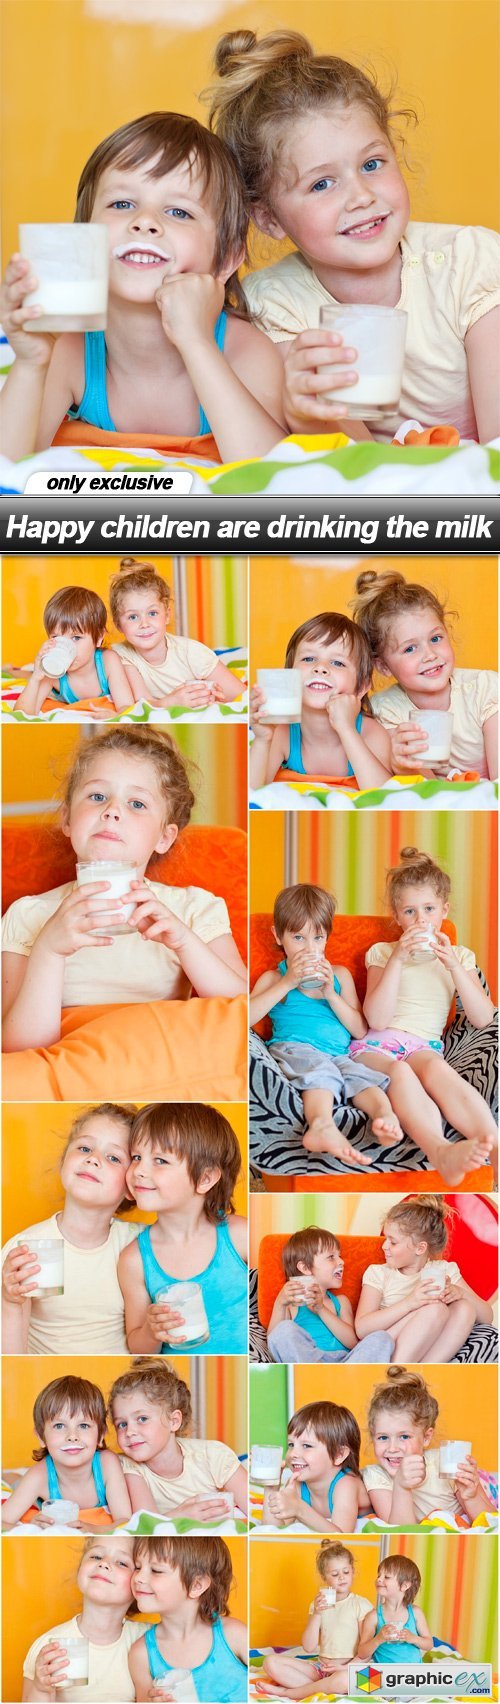 Happy children are drinking the milk - 10 UHQ JPEG